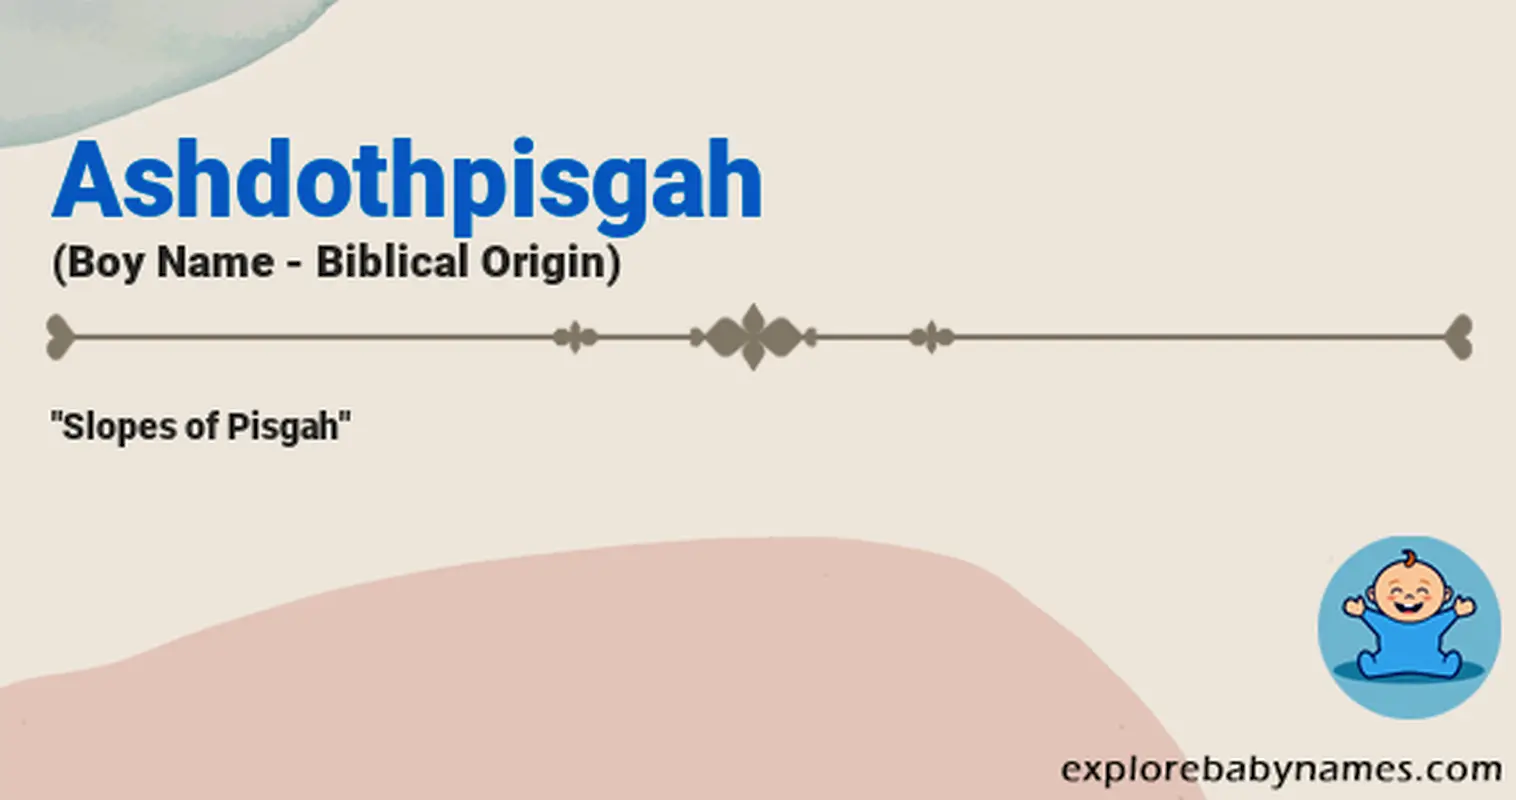 Meaning of Ashdothpisgah